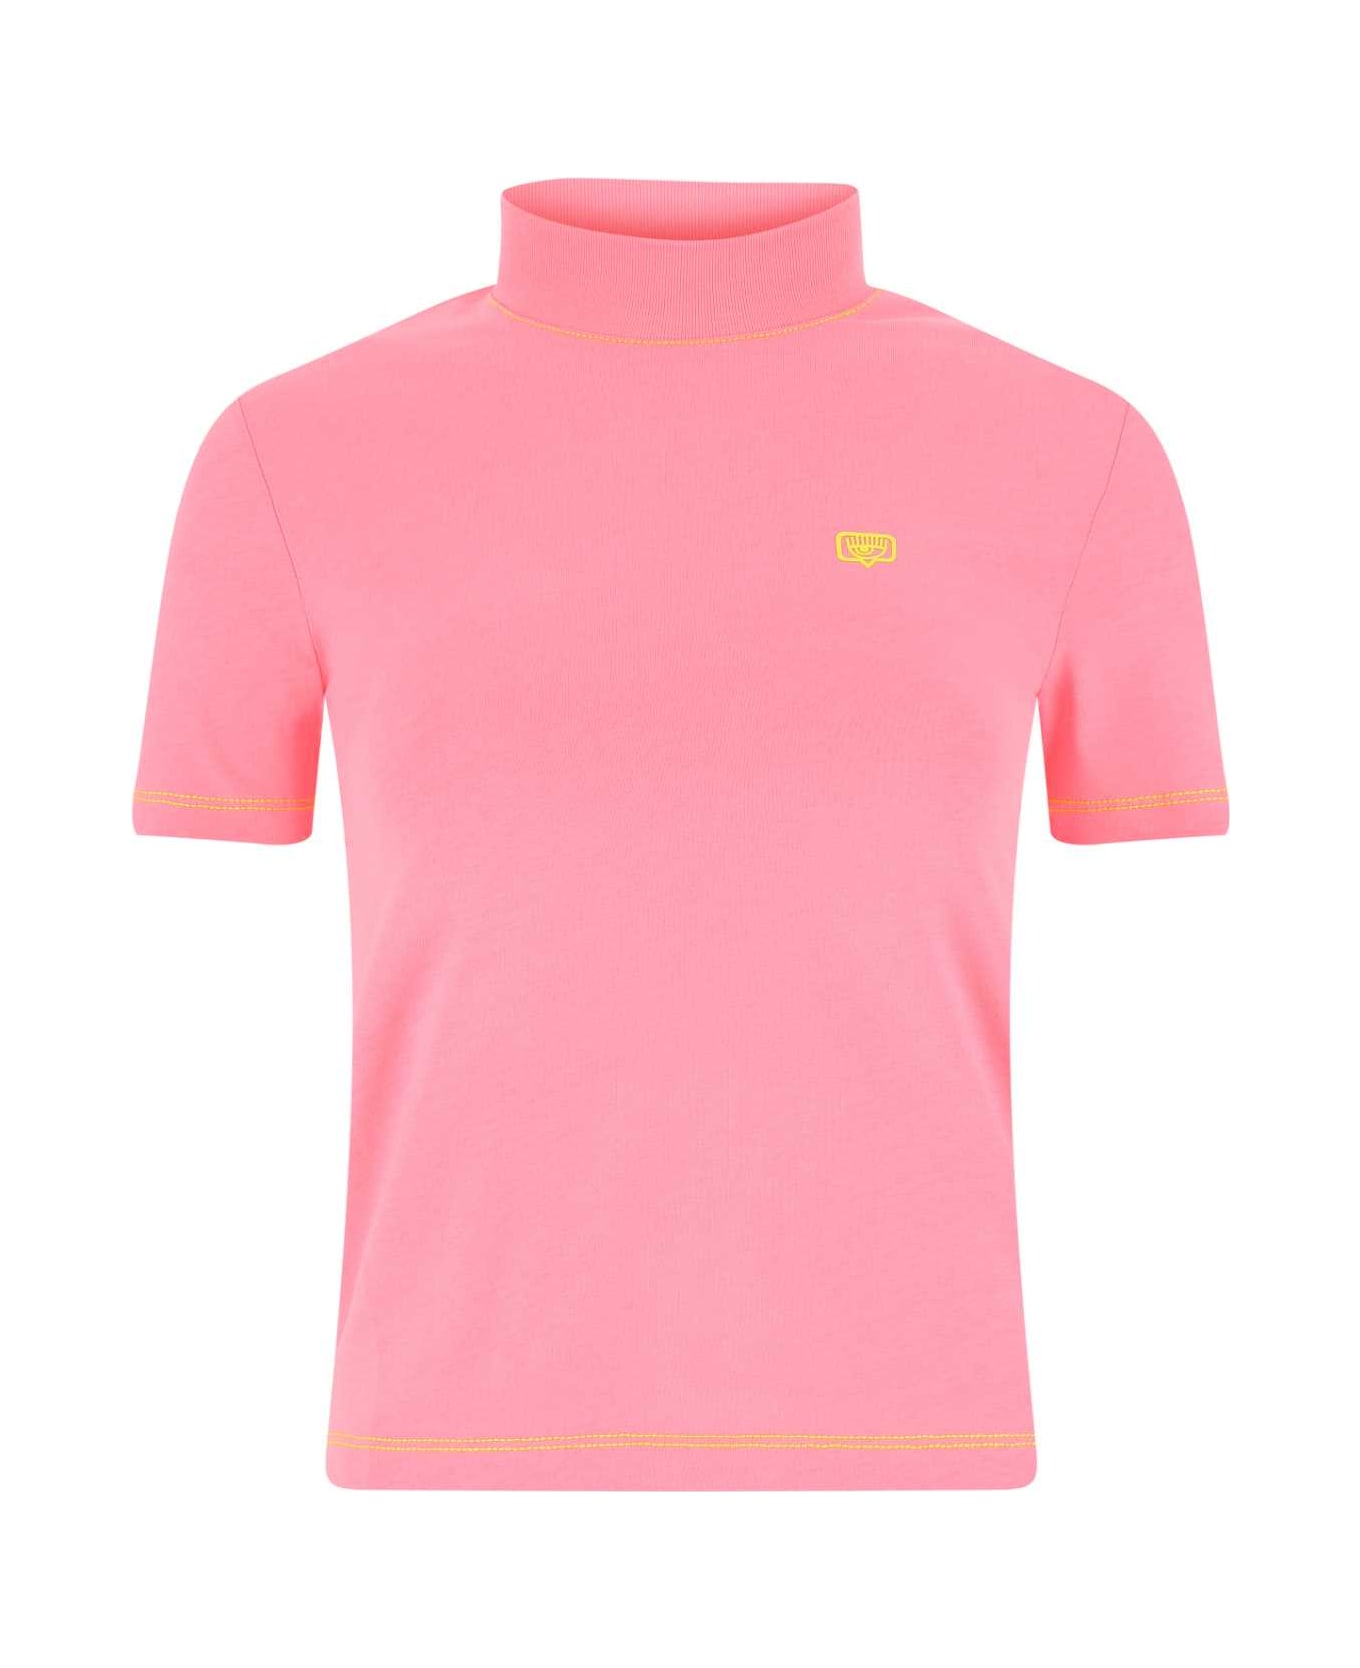 Chiara Ferragni Pink Cotton T-shirt - 414 ポロシャツ